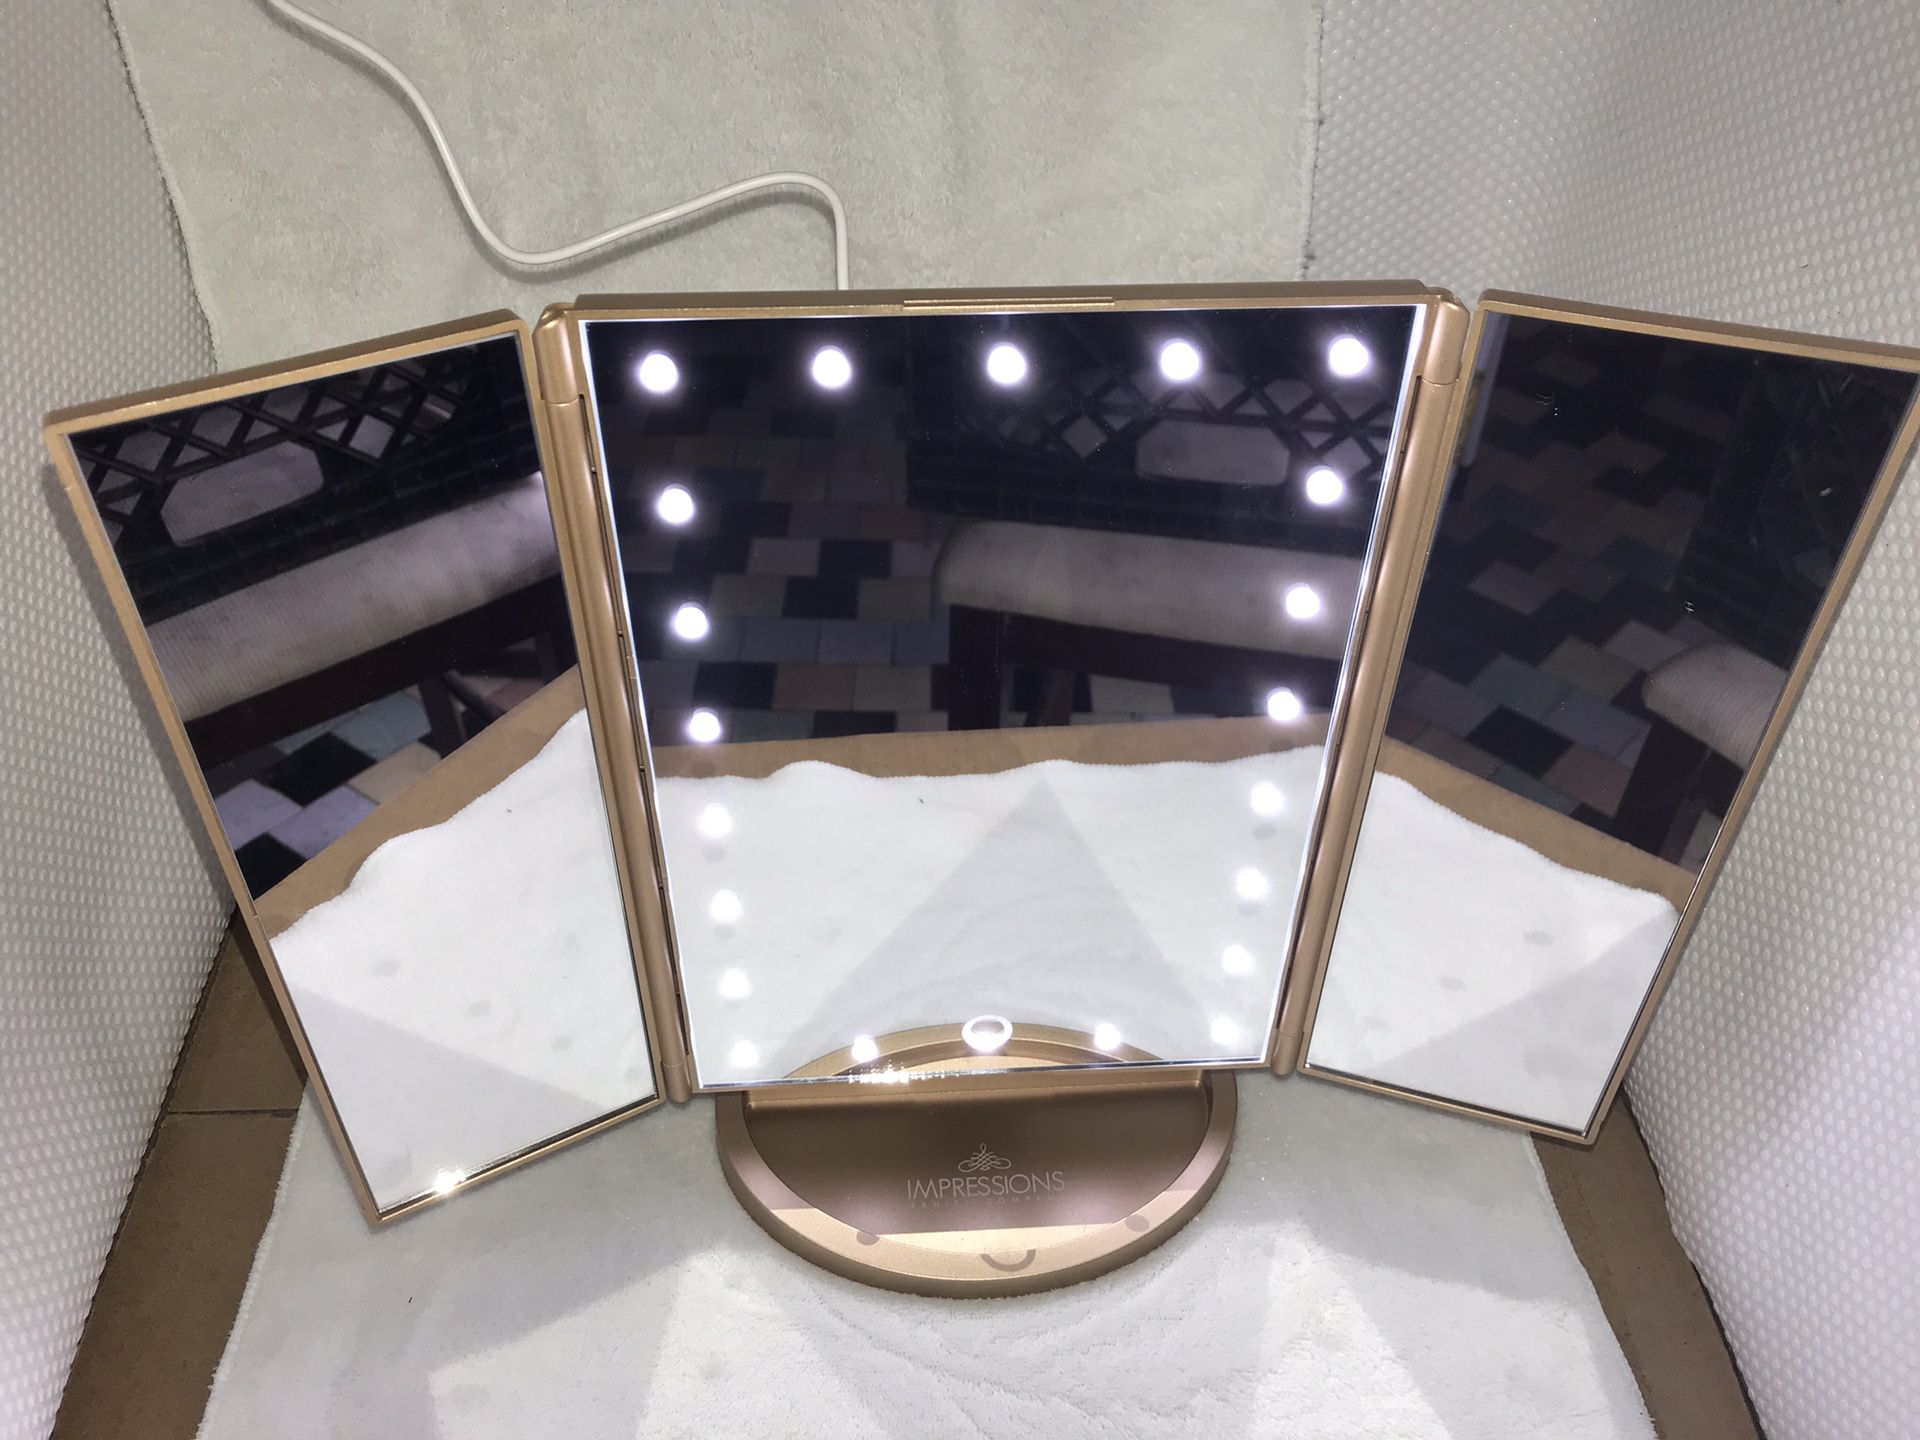 Impressions Led Lighted Makeup Mirror, Tri Folder White Mirror 21 LED Vanity